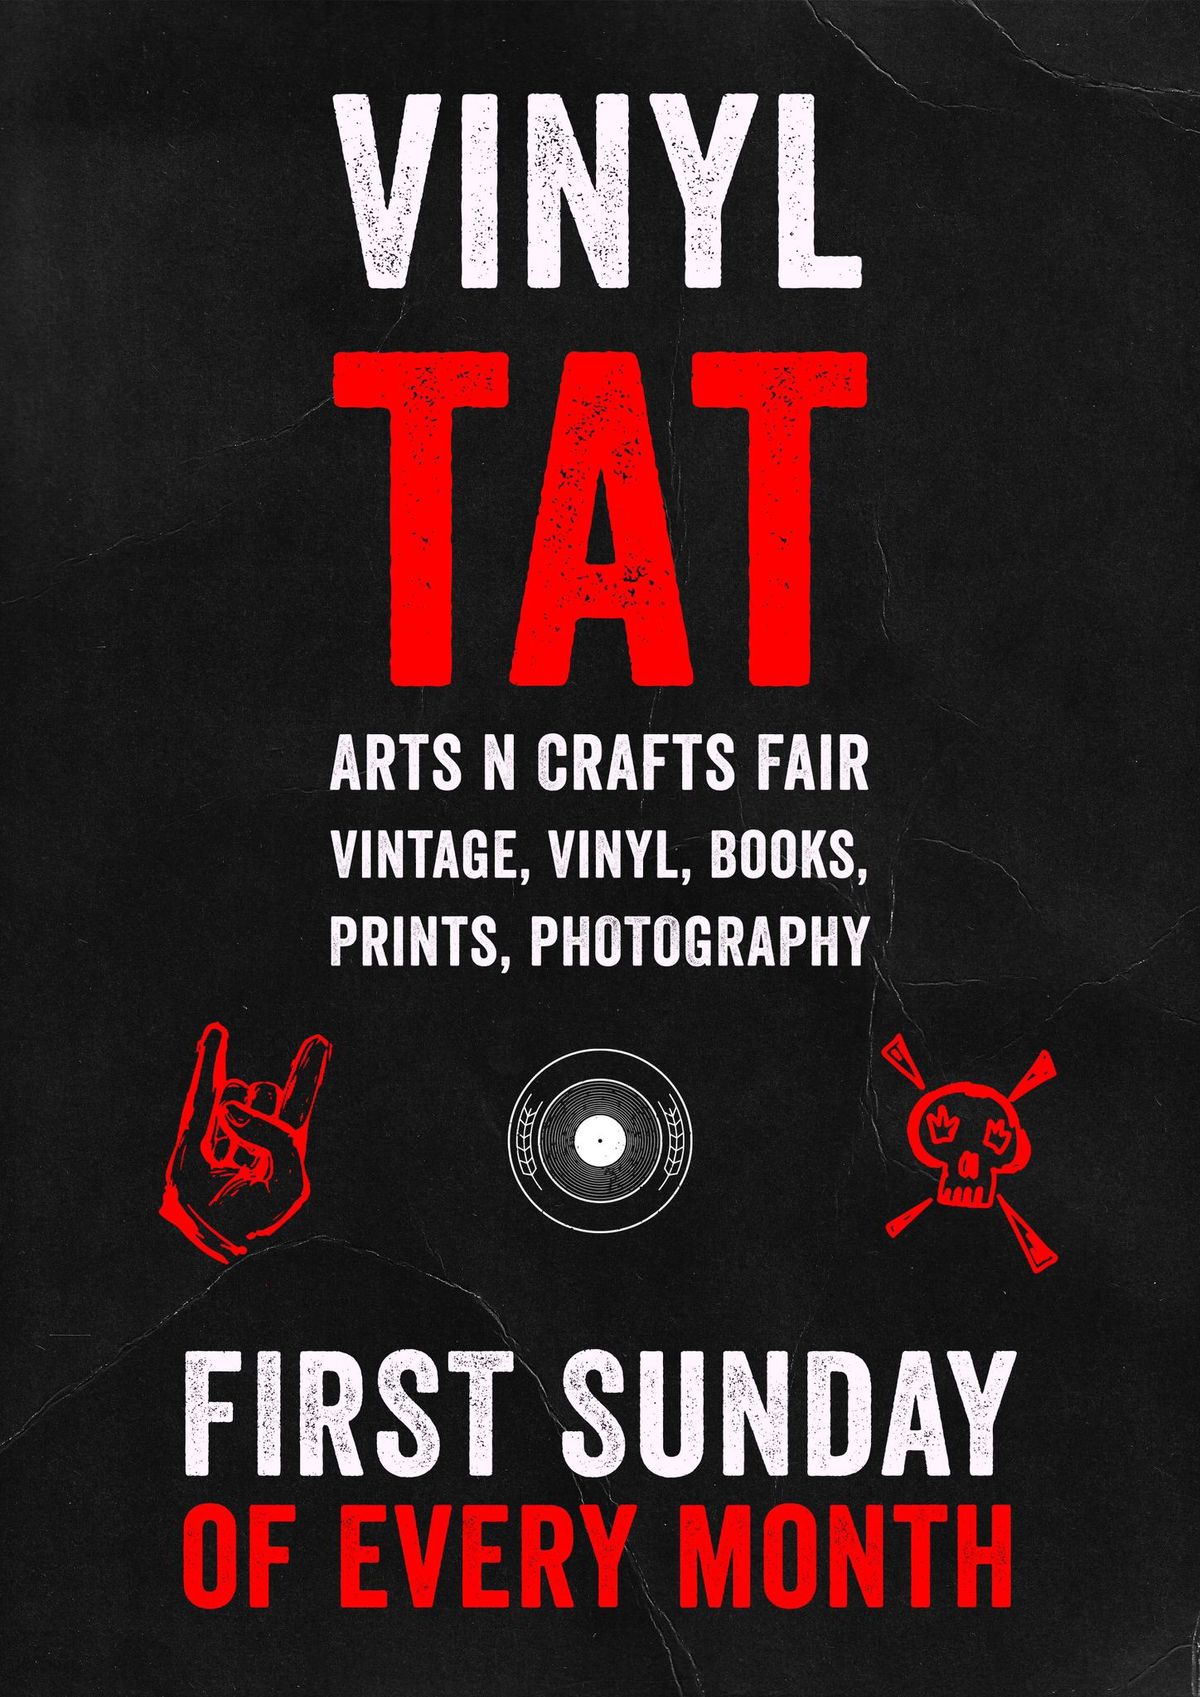 The Vinyl Tap Monthly Vintage Arts & Crafts Fair